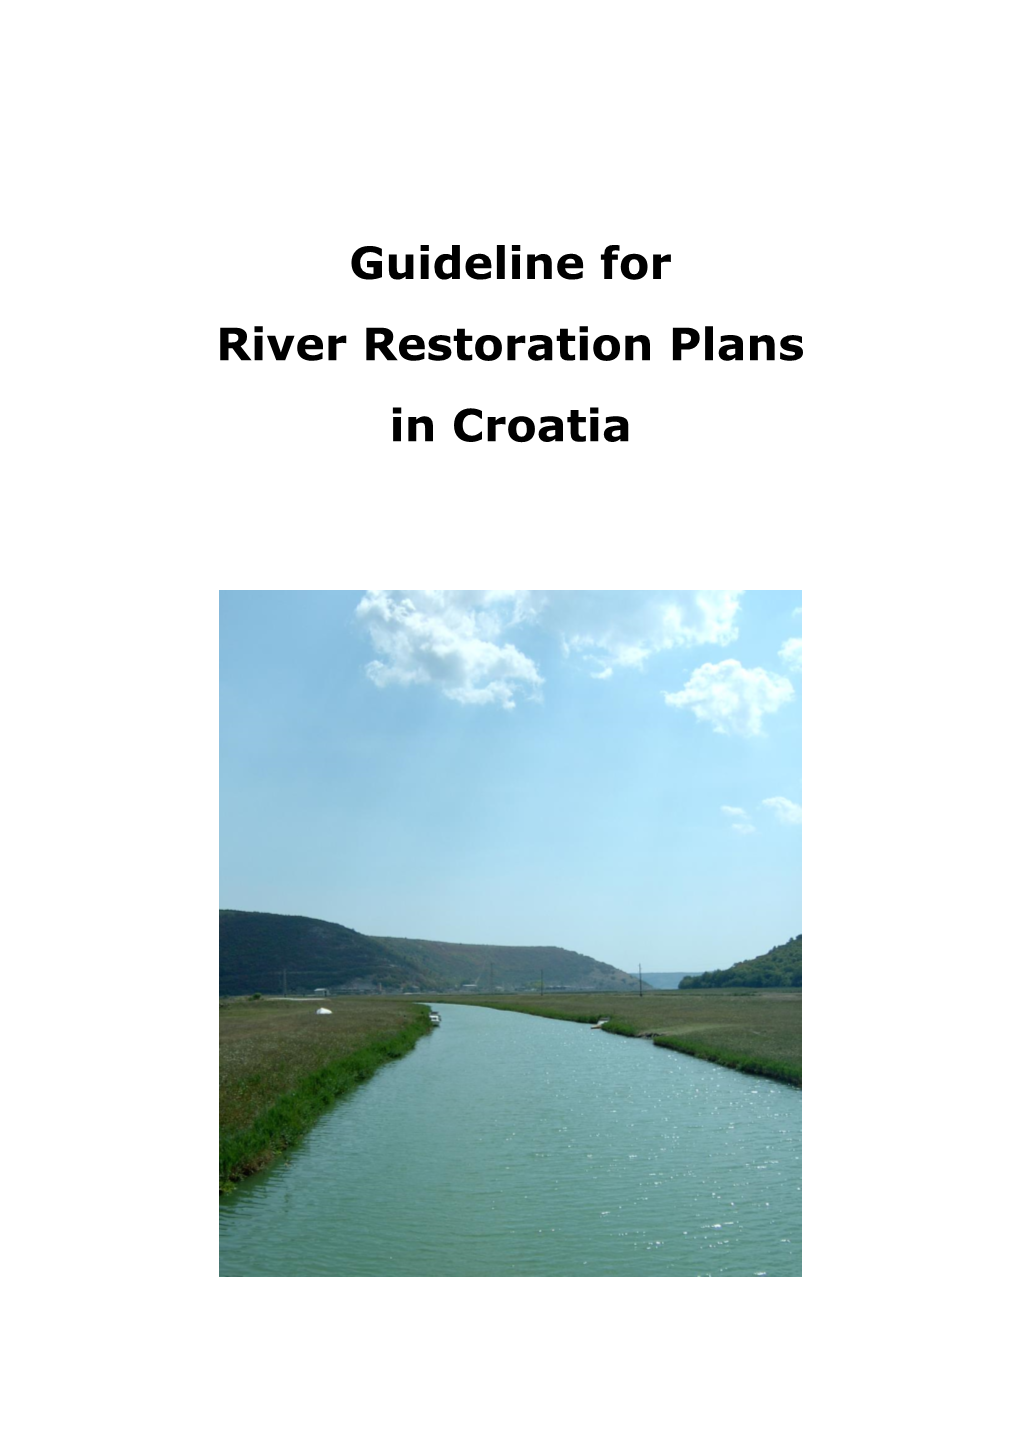 Guideline for River Restoration Plans in Croatia